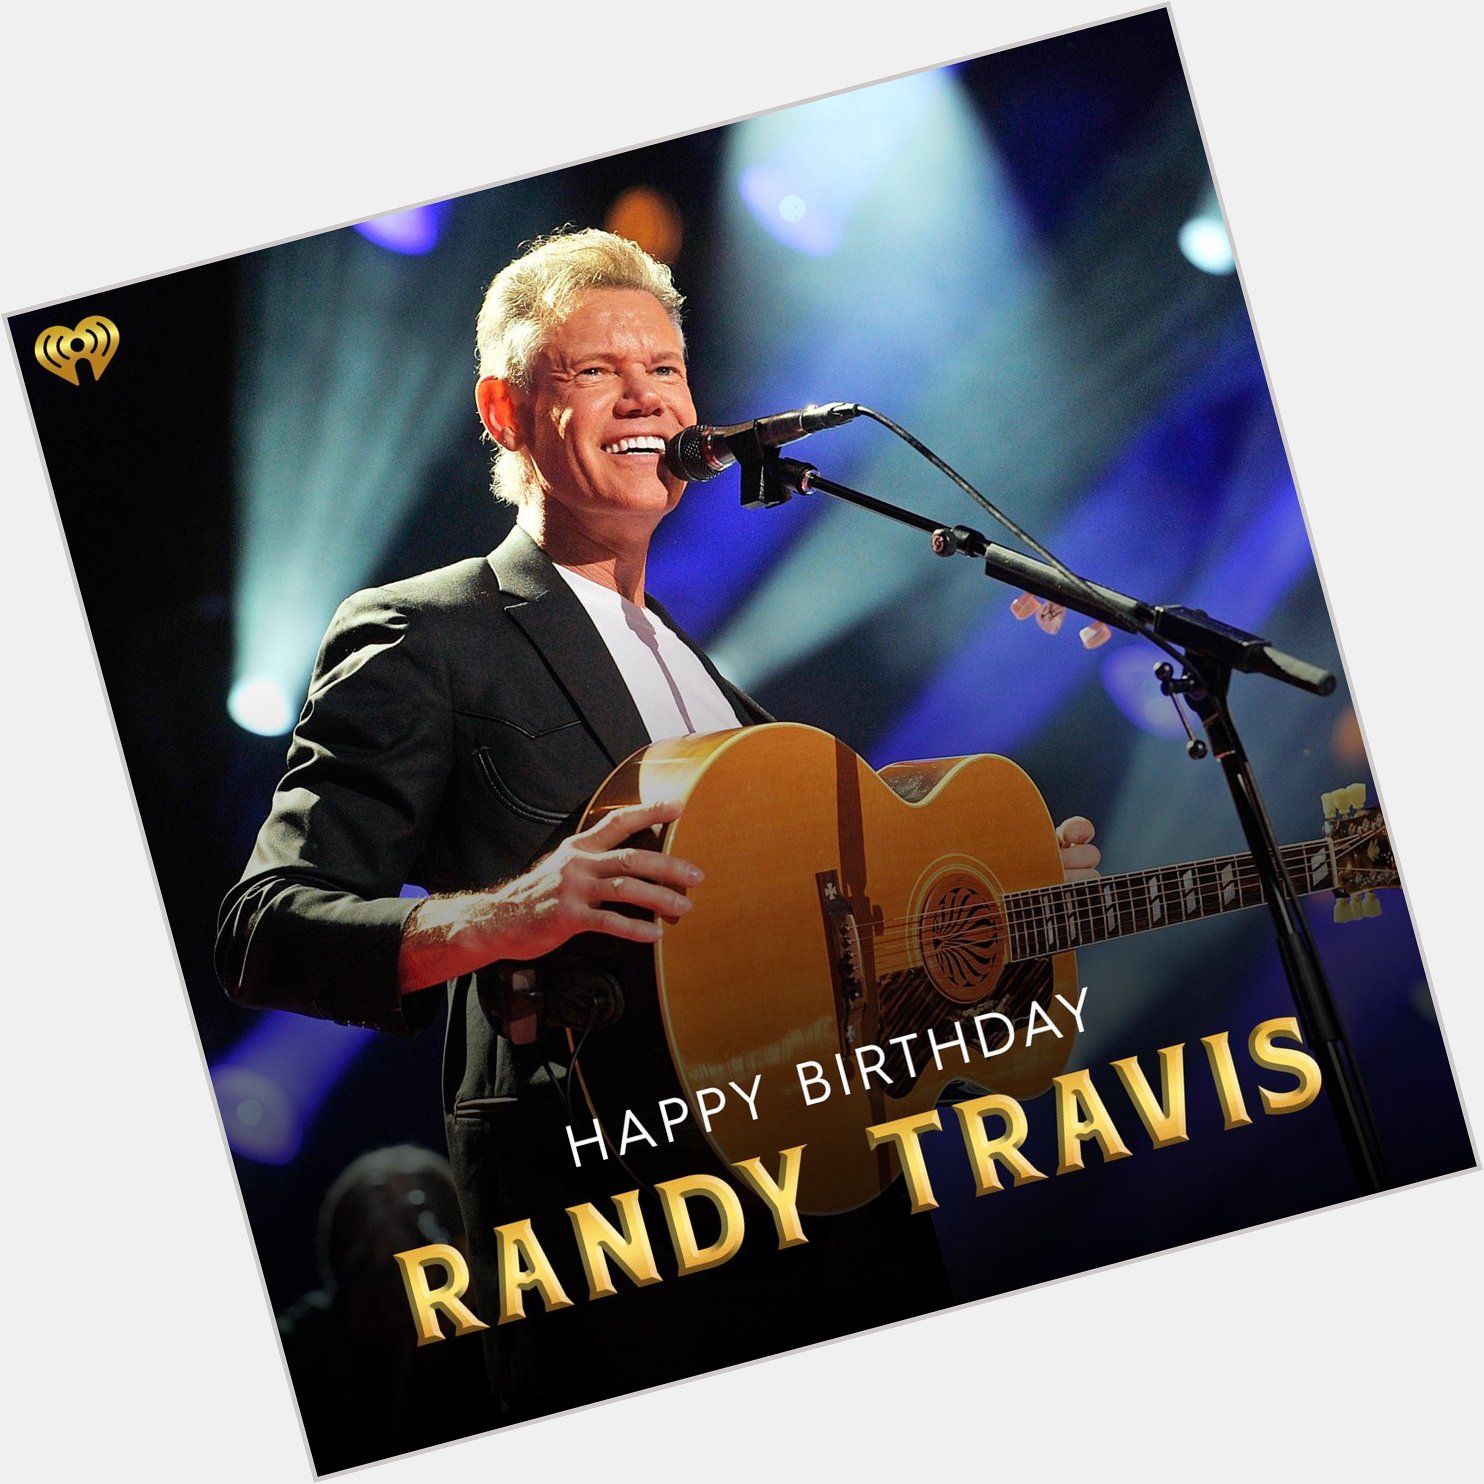 In BIG story; Happy Birthday to Randy Travis!  